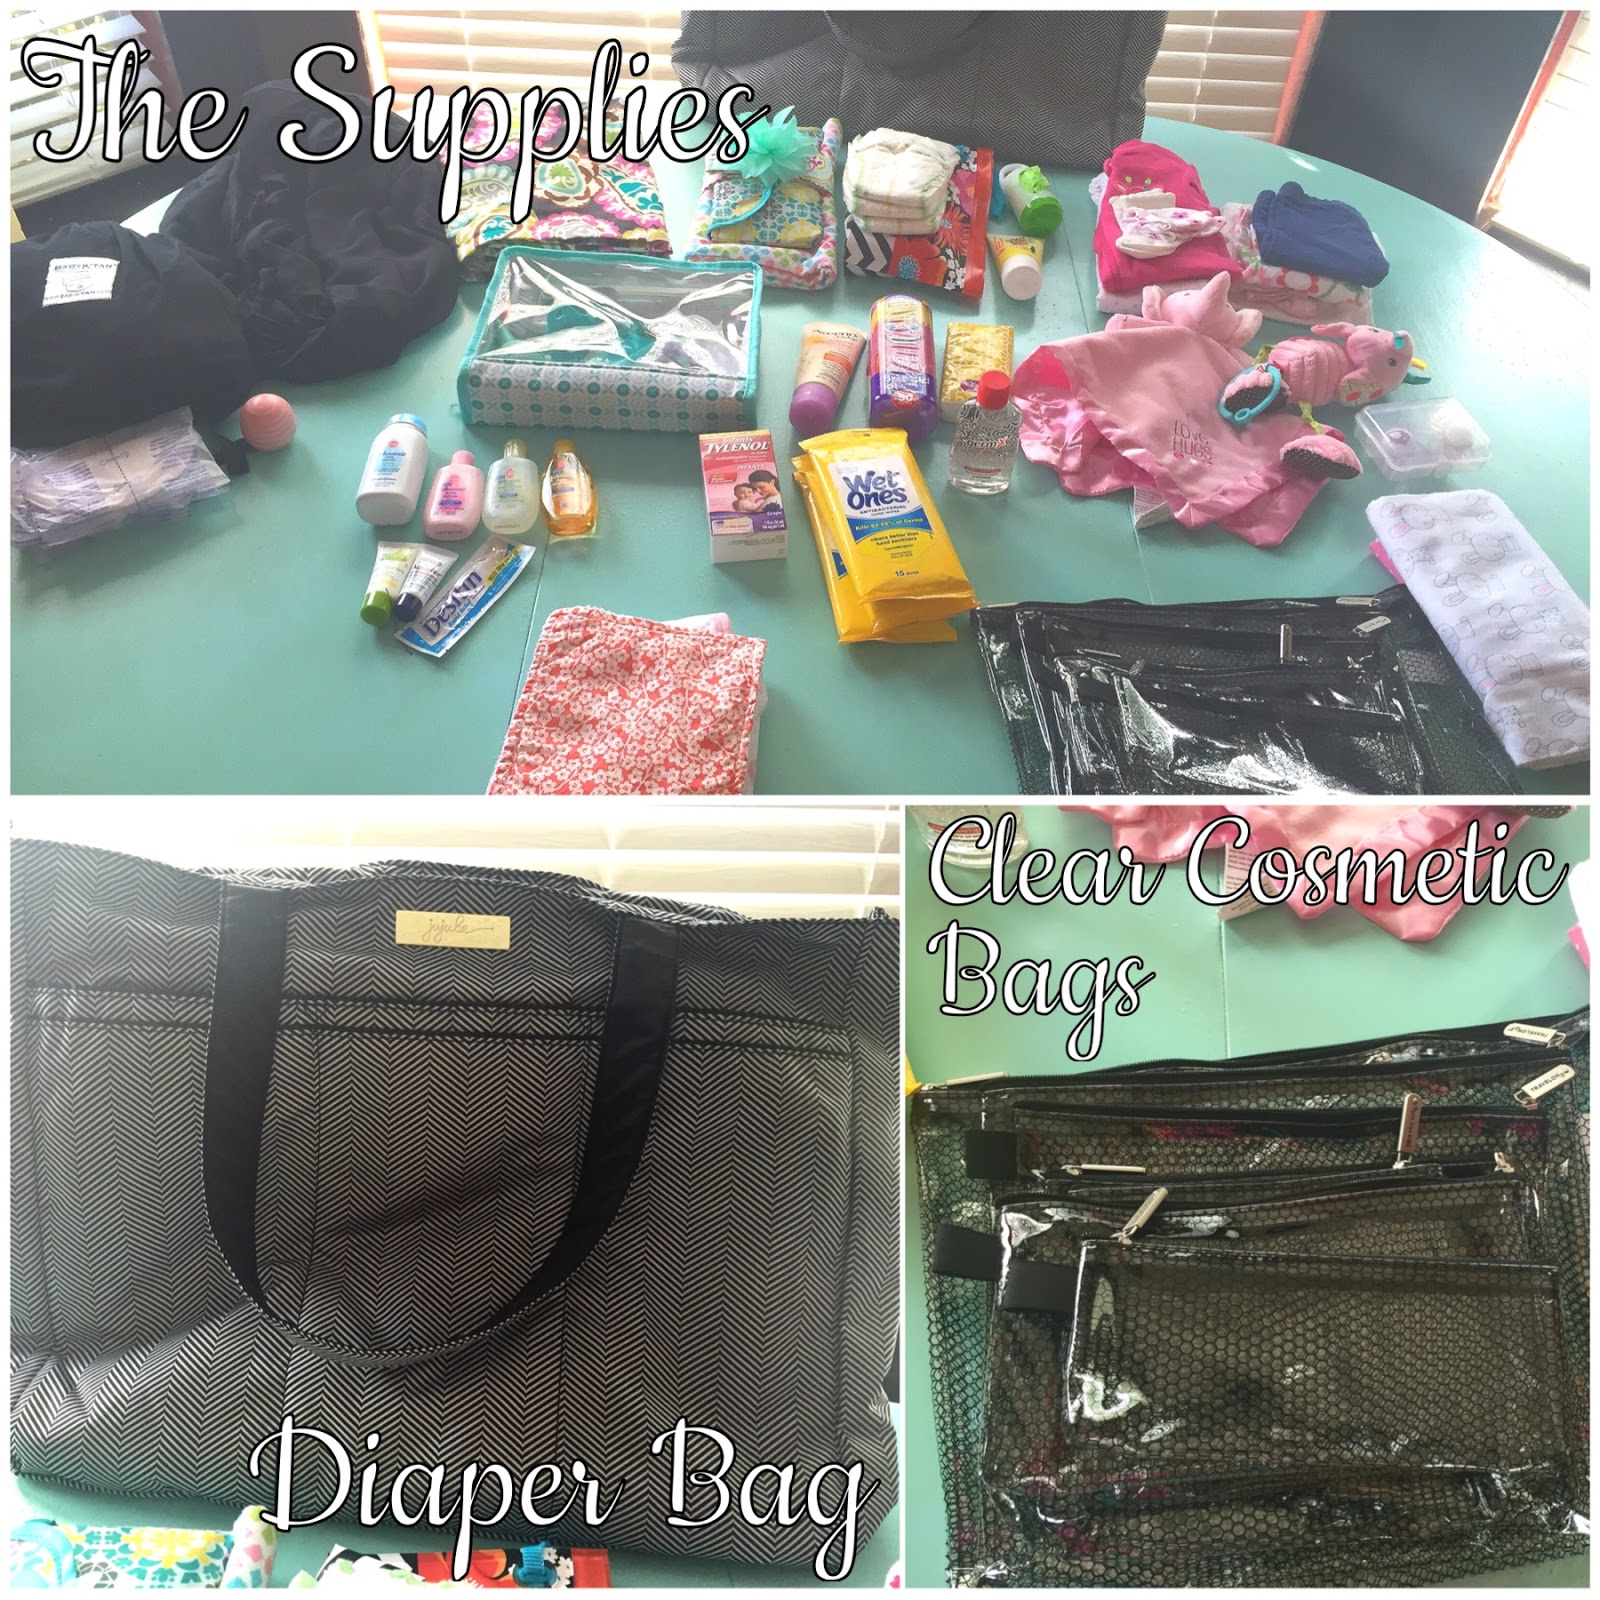 Tiffany Caram: ALL THE BAGS PT. 1: THE DIAPER BAG